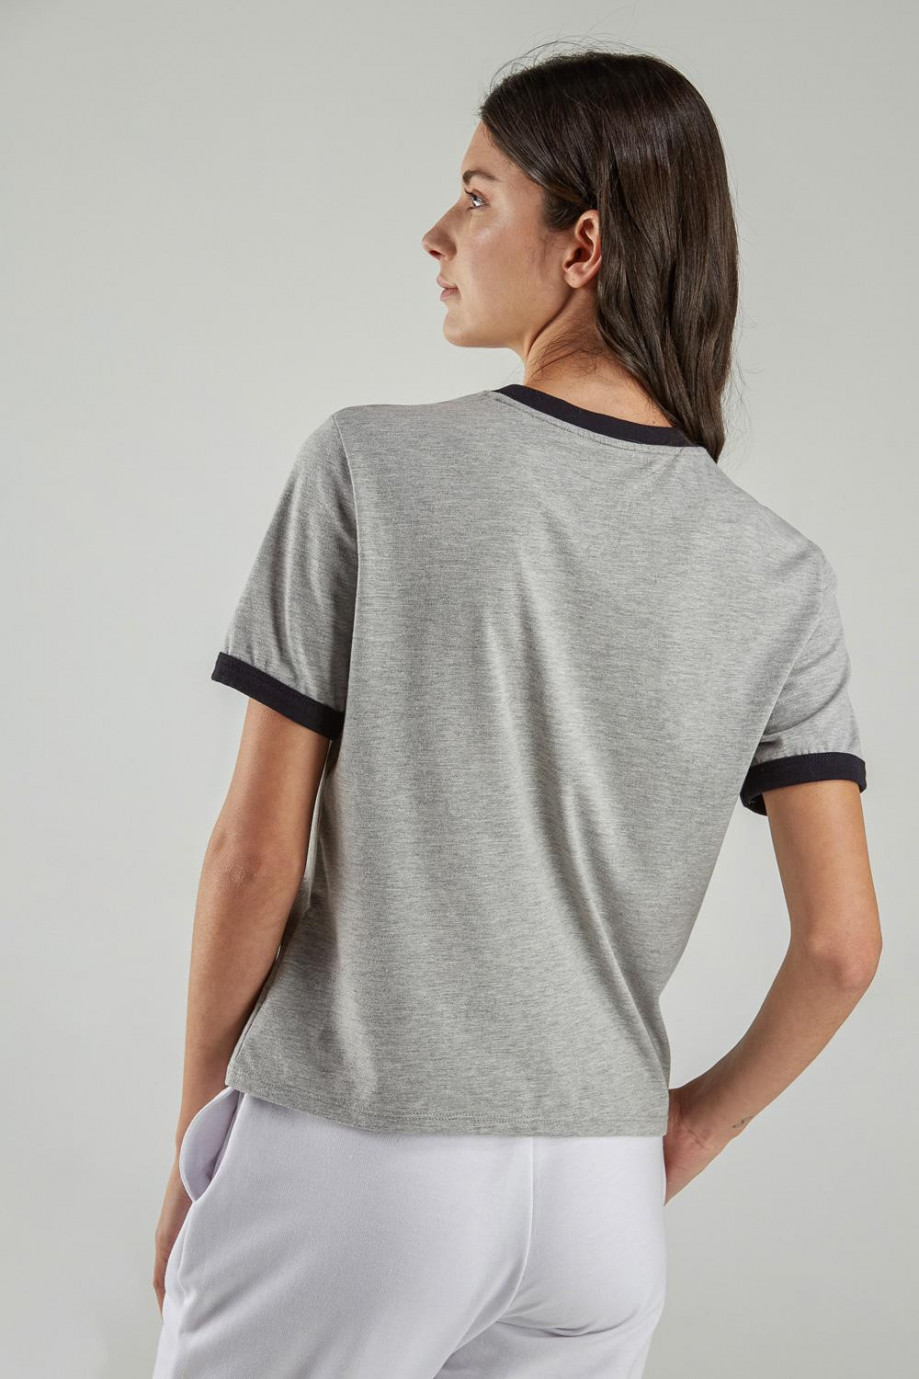 Camiseta gris medio manga corta con estampado college de Harvard